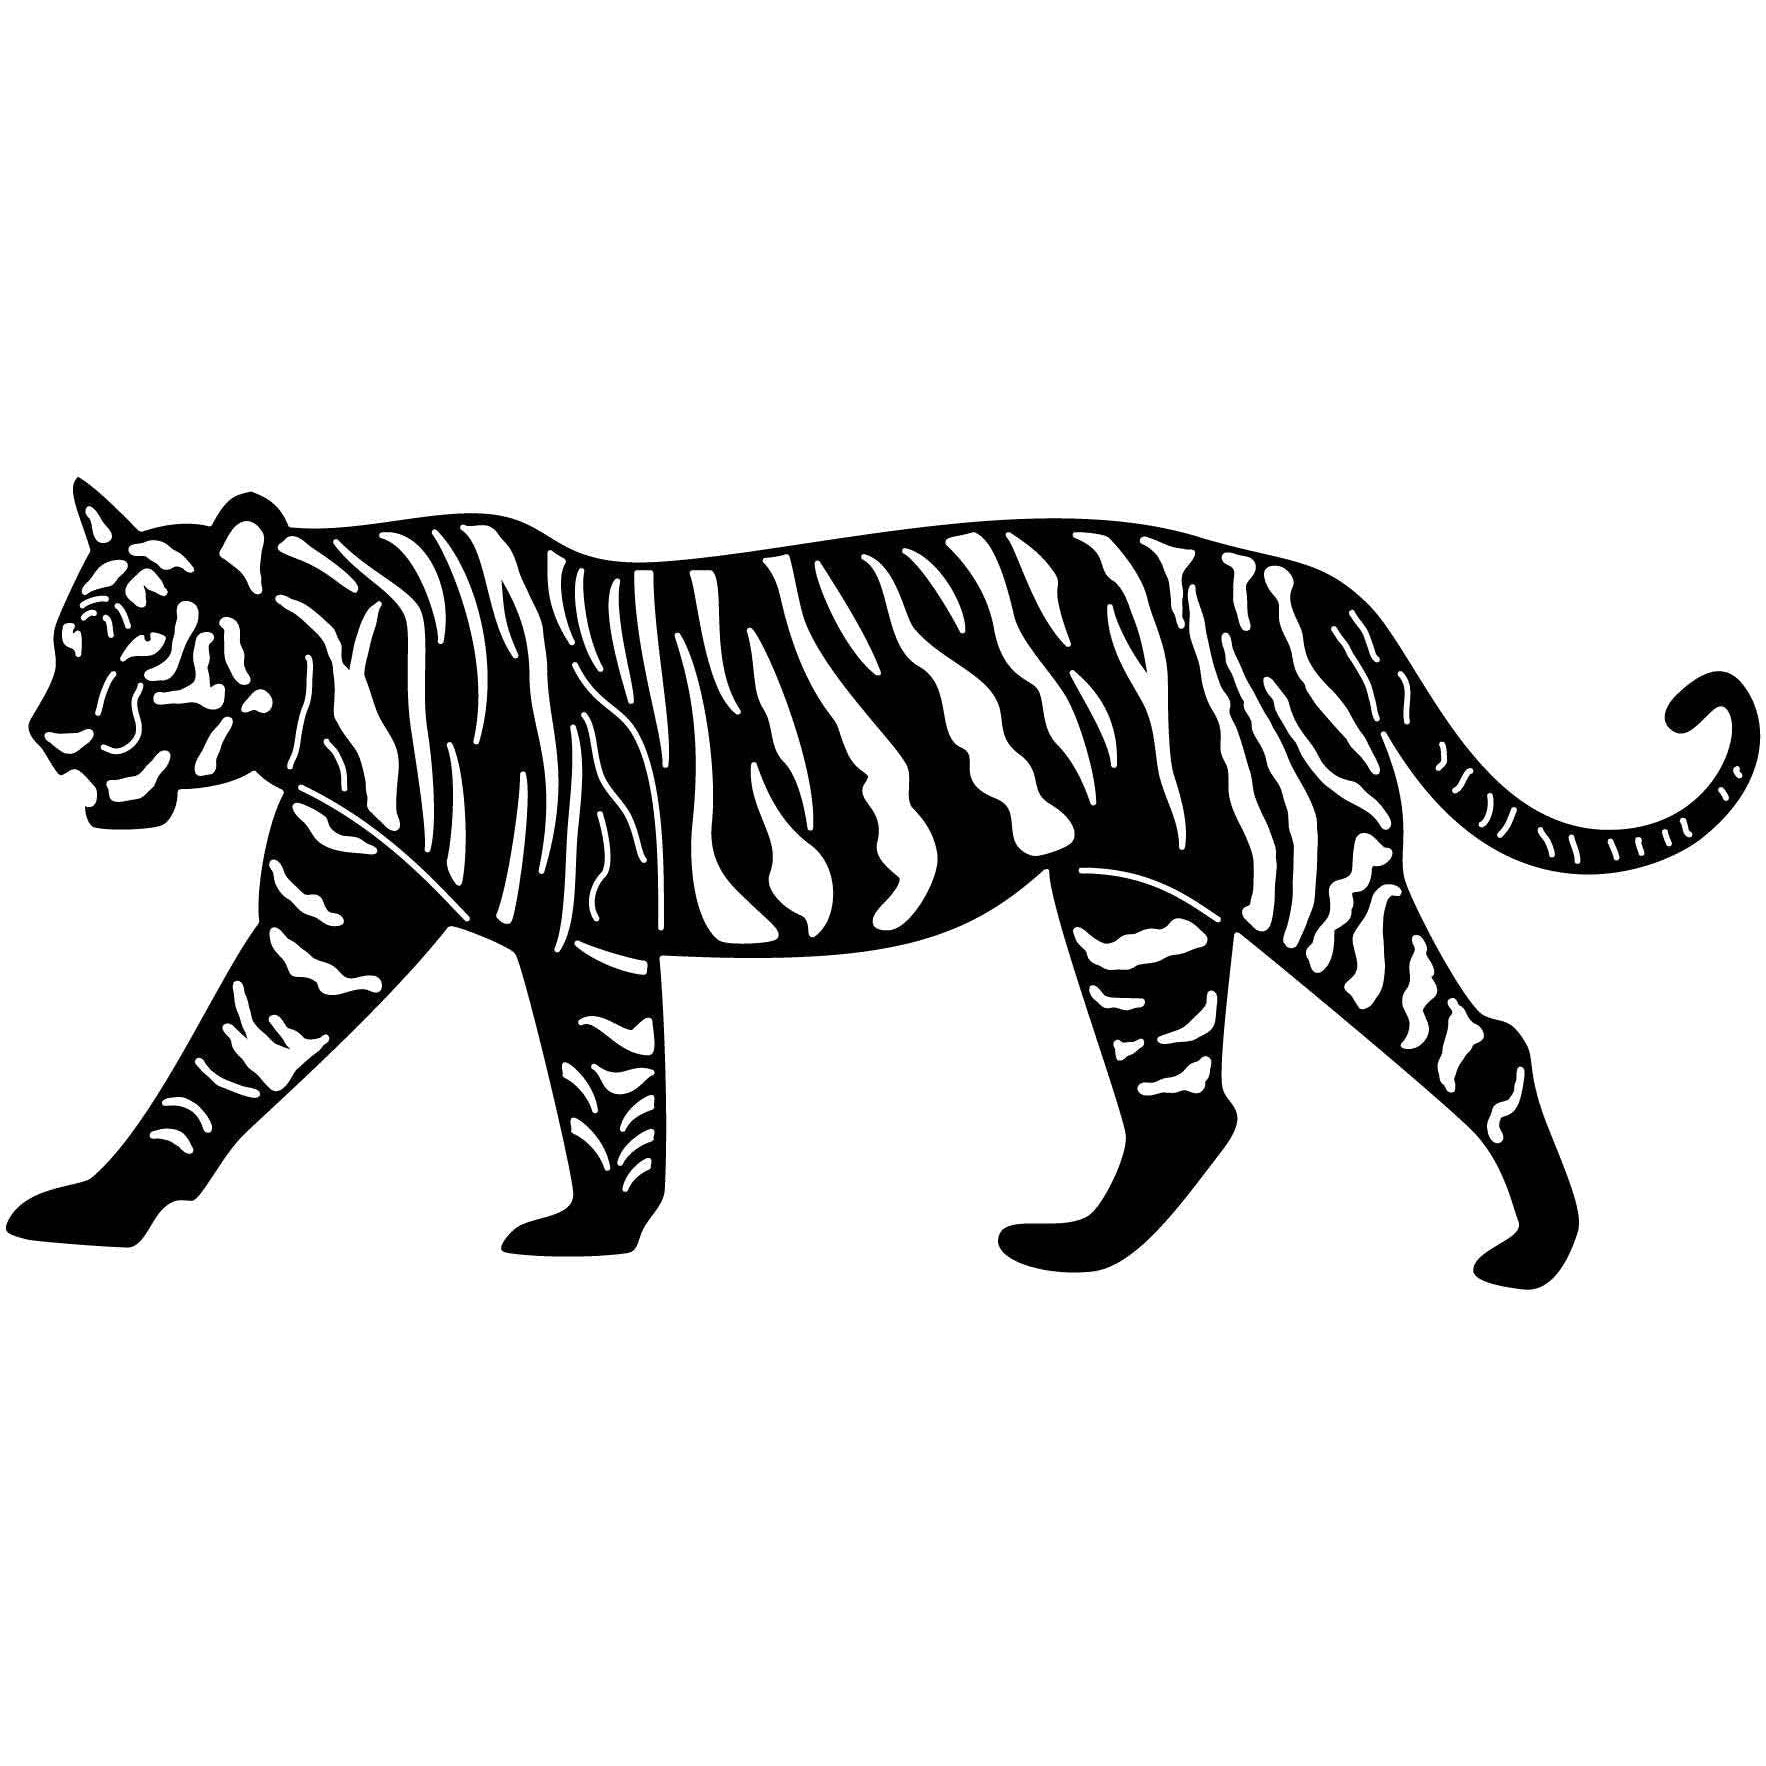 Bengal Tiger Walking-DXFforCNC.com-DXF Files cut ready cnc machines